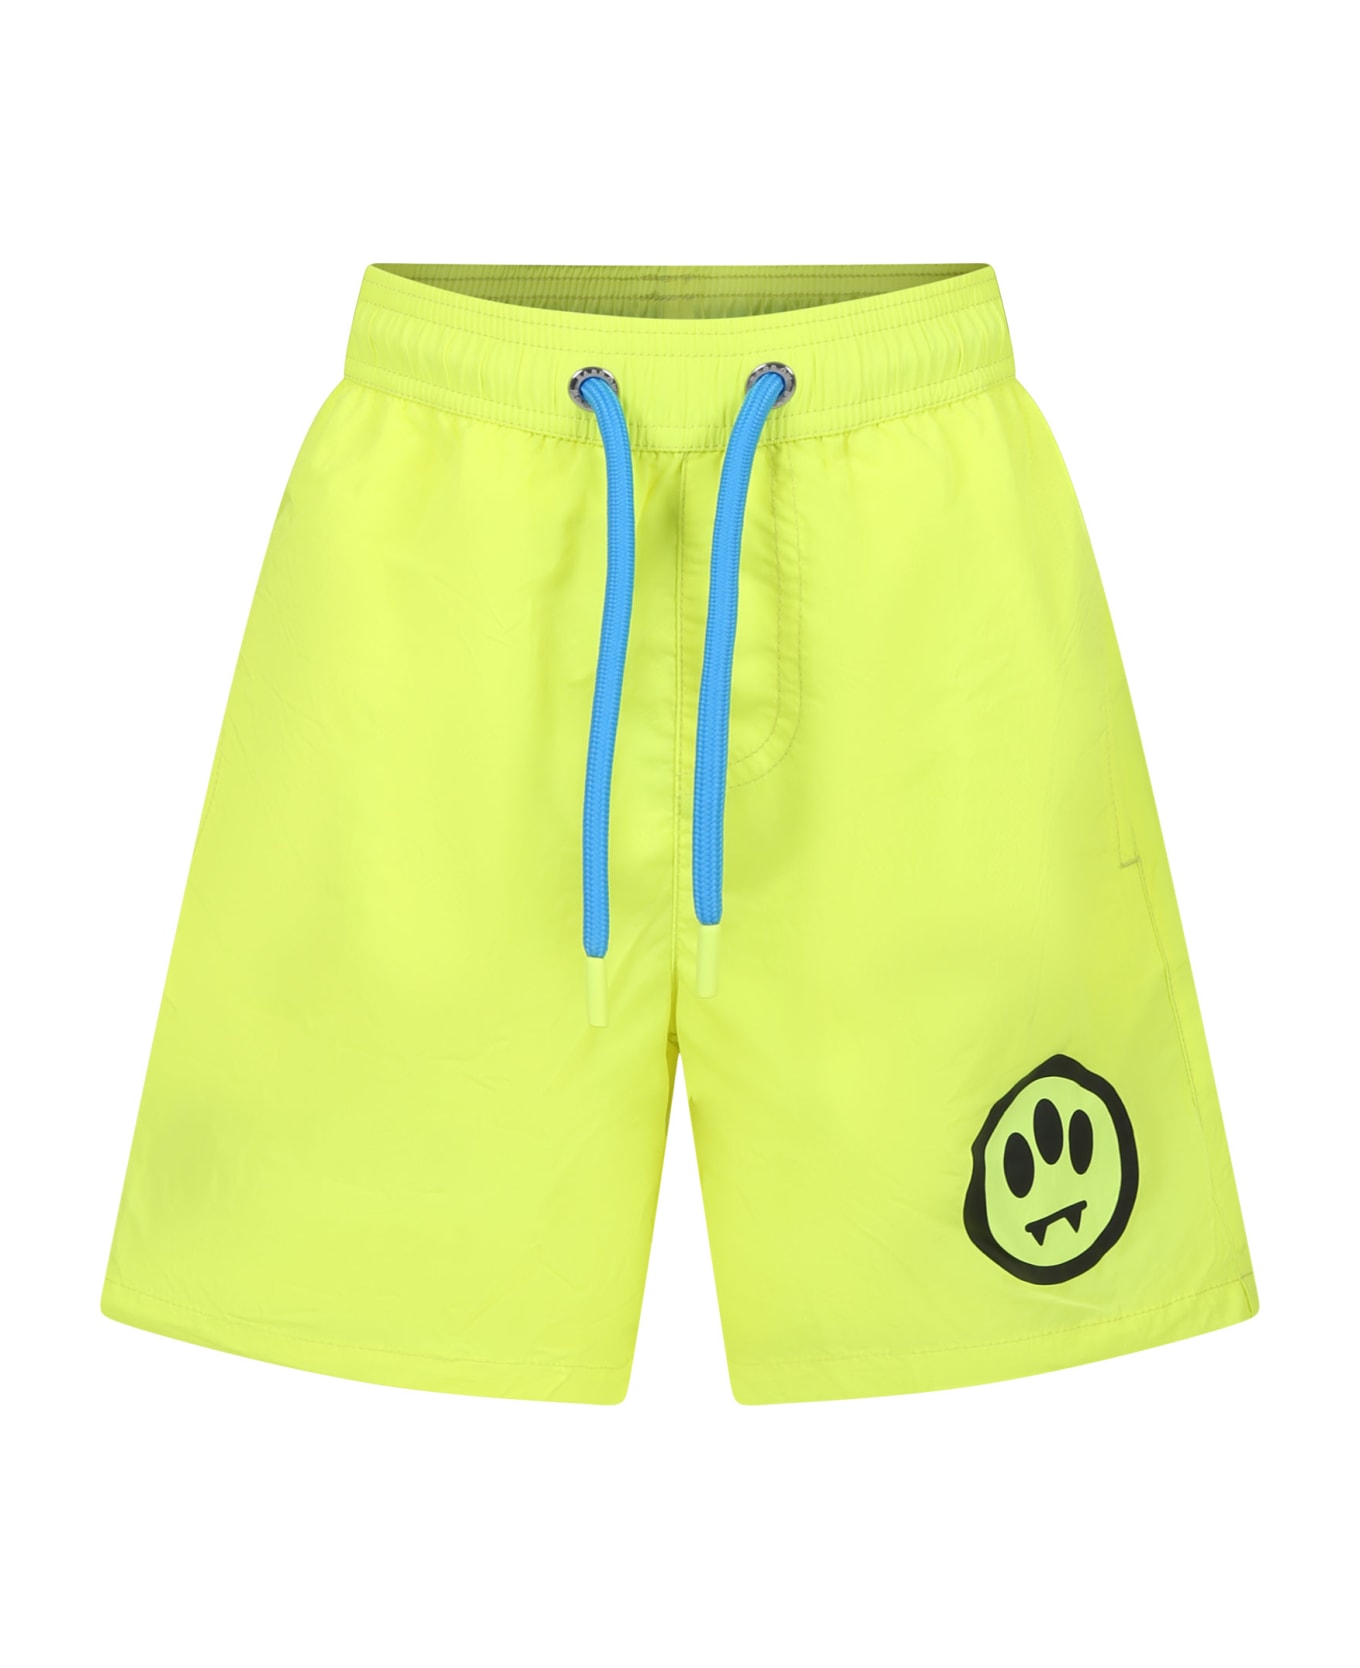 Barrow Yellow Swim Shorts For Boy With Smiley - Yellow 水着